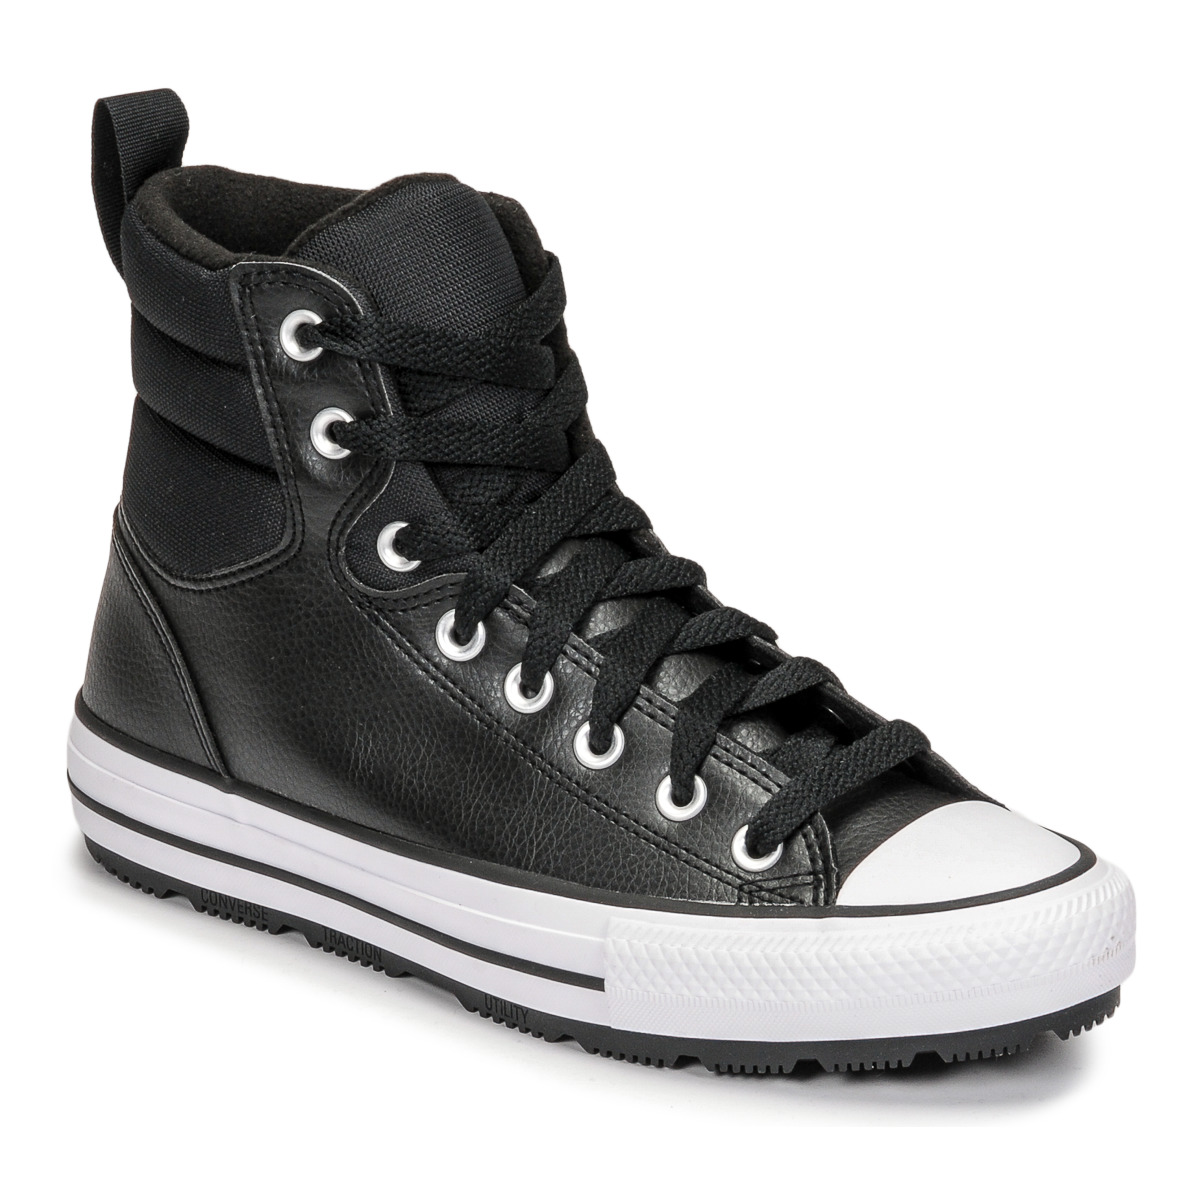 Cipők Magas szárú edzőcipők Converse CHUCK TAYLOR ALL STAR BERKSHIRE BOOT COLD FUSION HI Fekete 